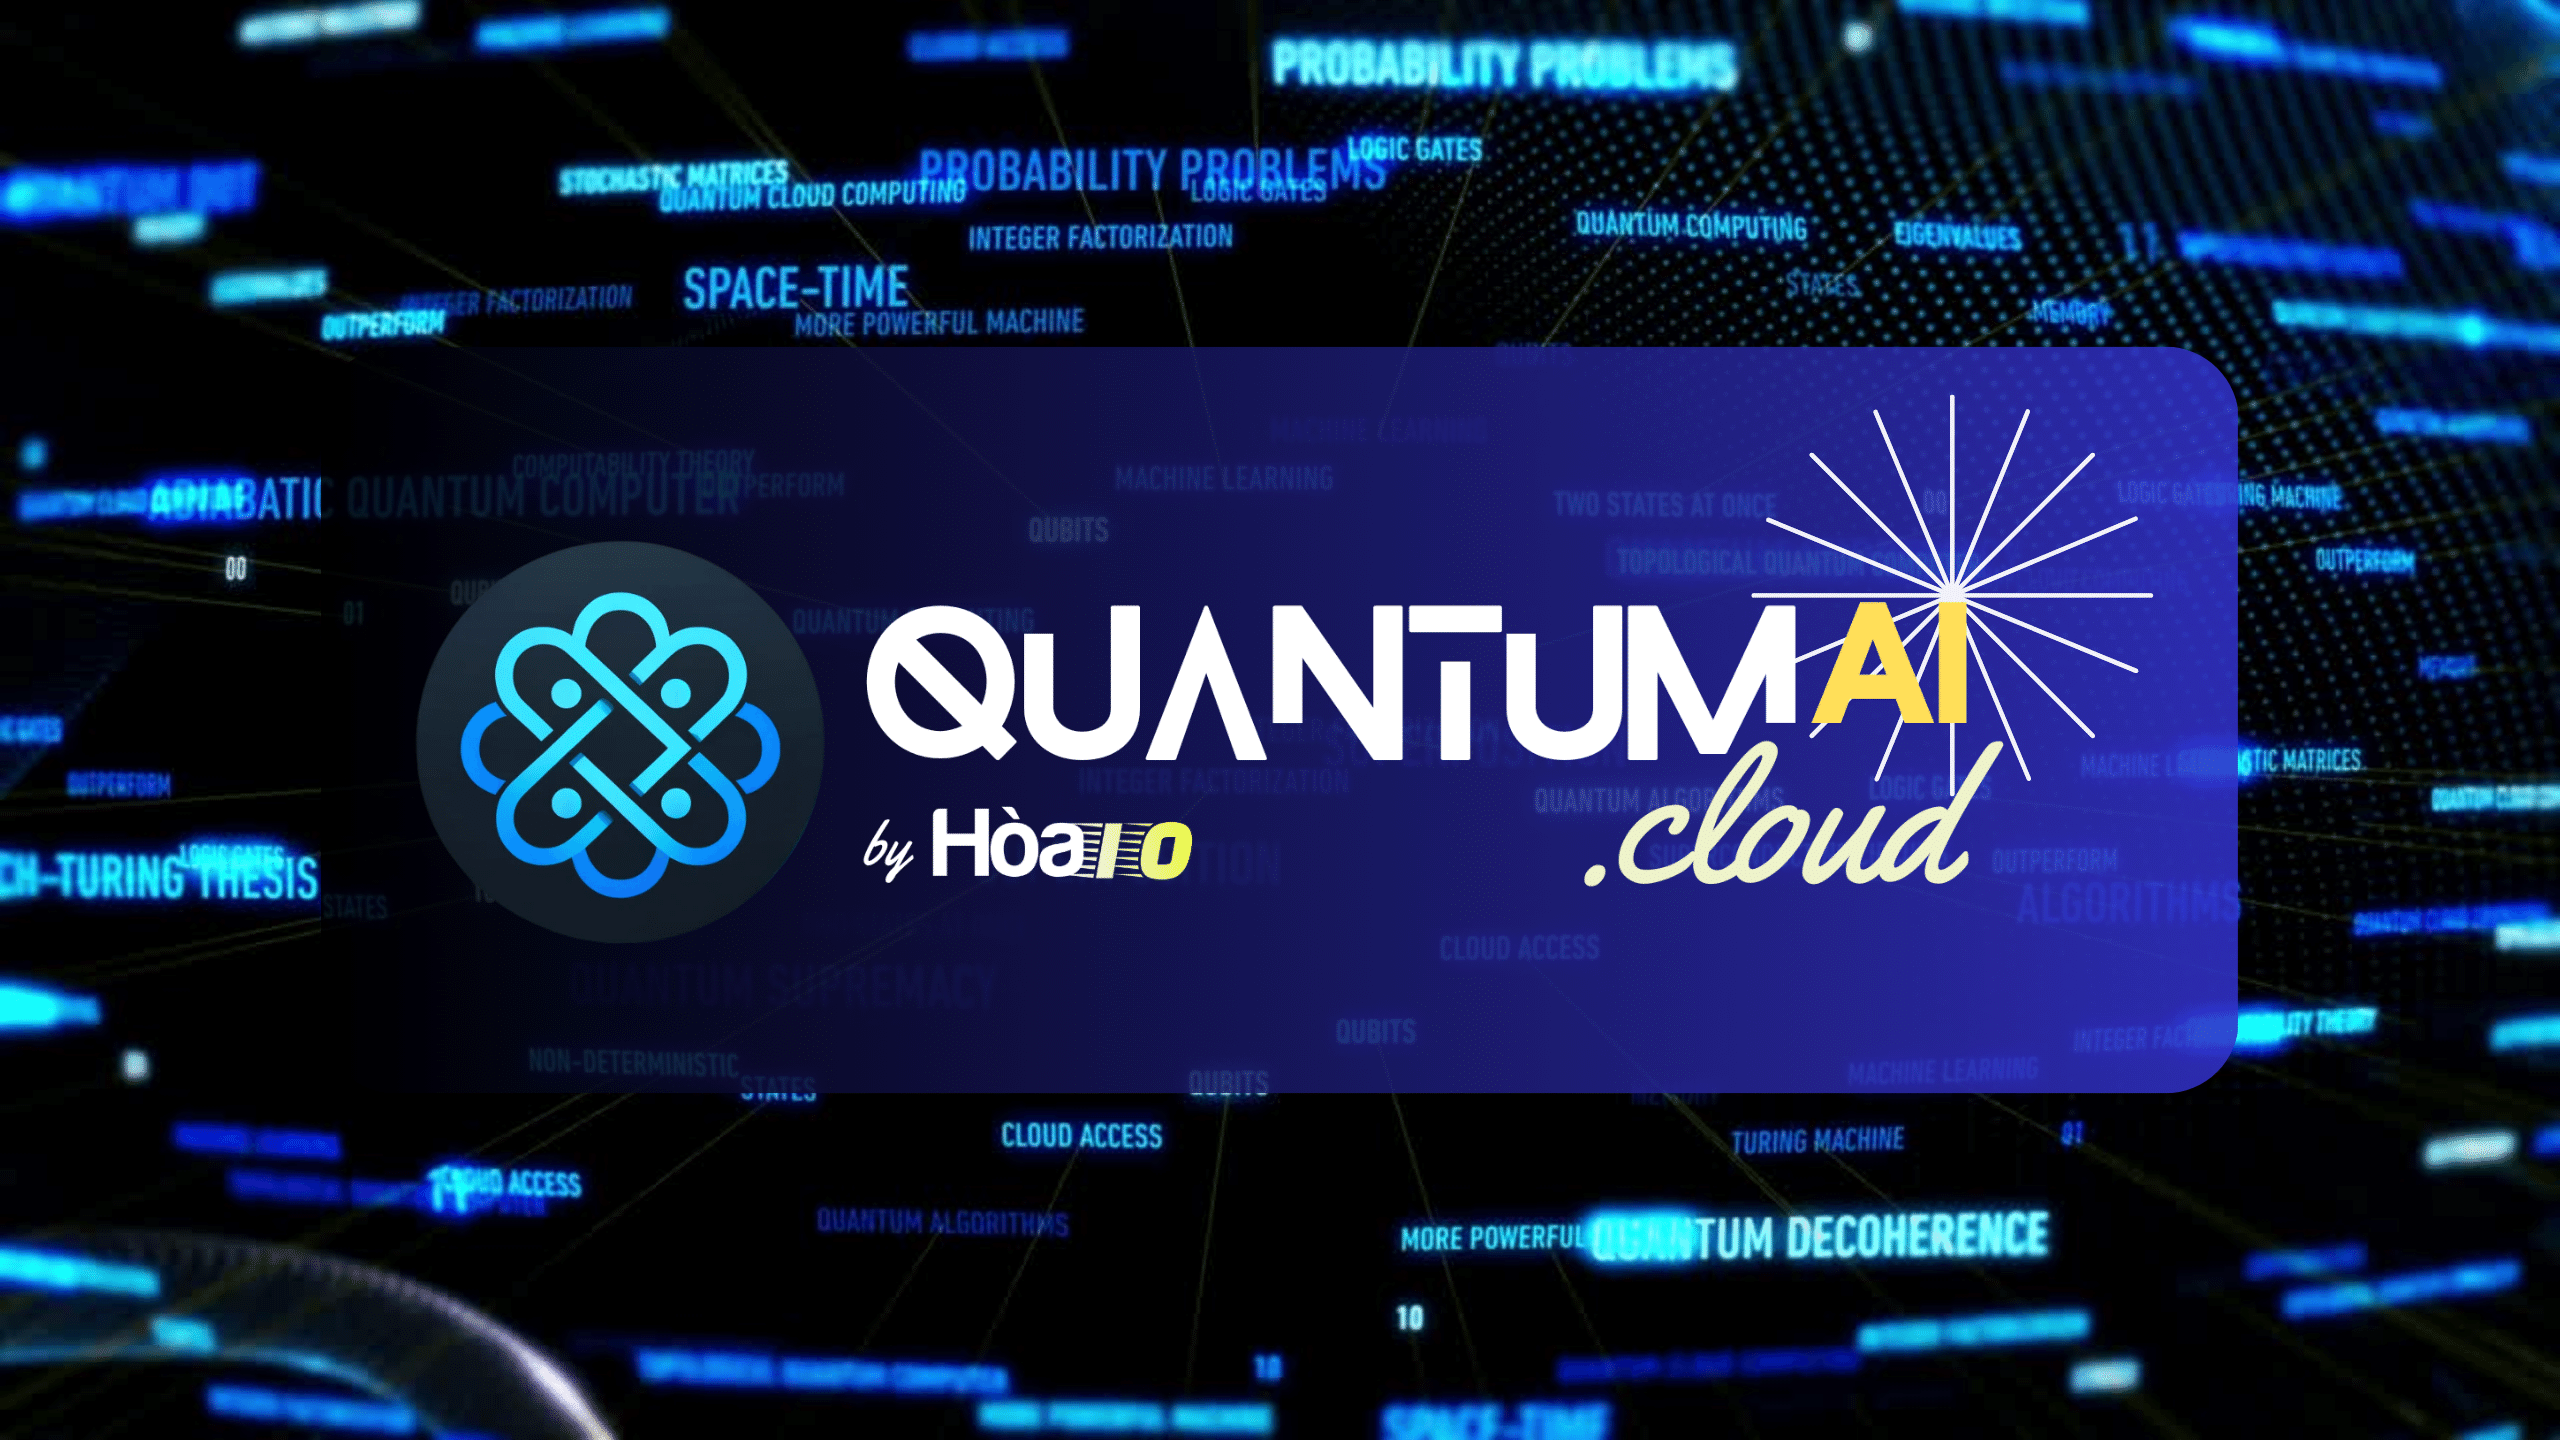 QuantumAI.Cloud Innovation Hub cover image